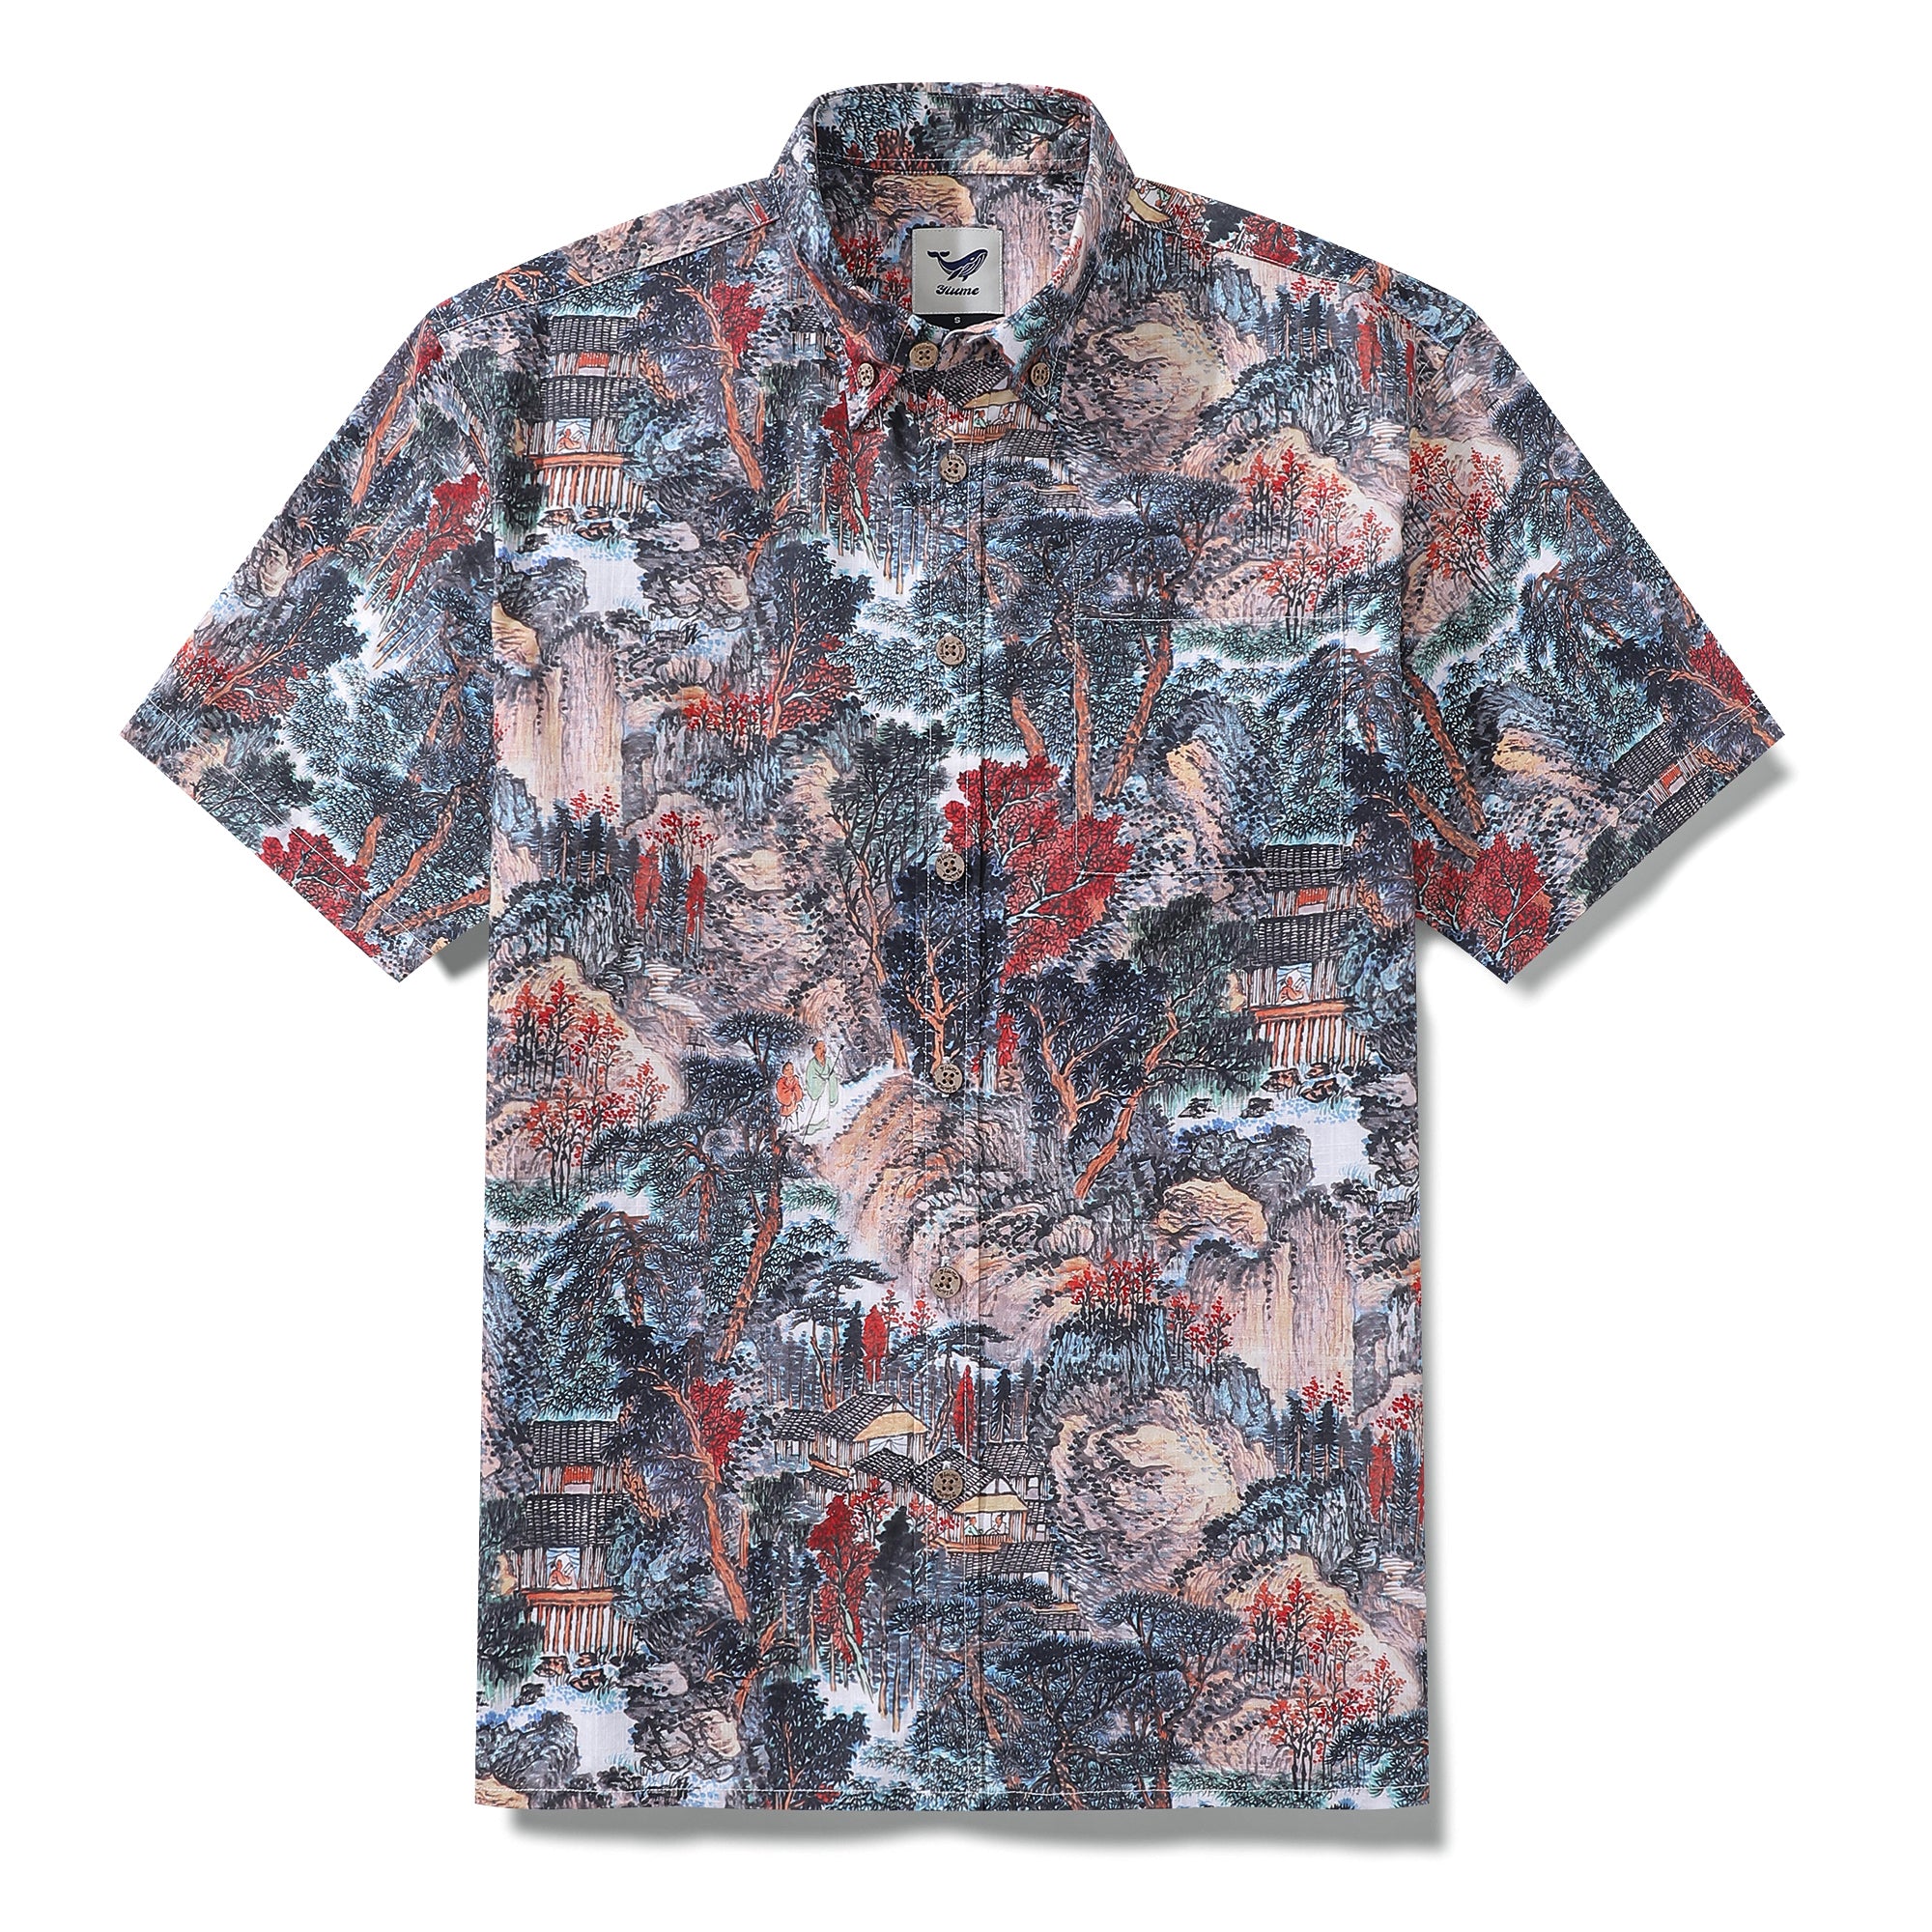 Men's Hawaiian Shirt Majesty of the Mountains Print Cotton Short Sleeve 1950s Vintage Aloha Shirt